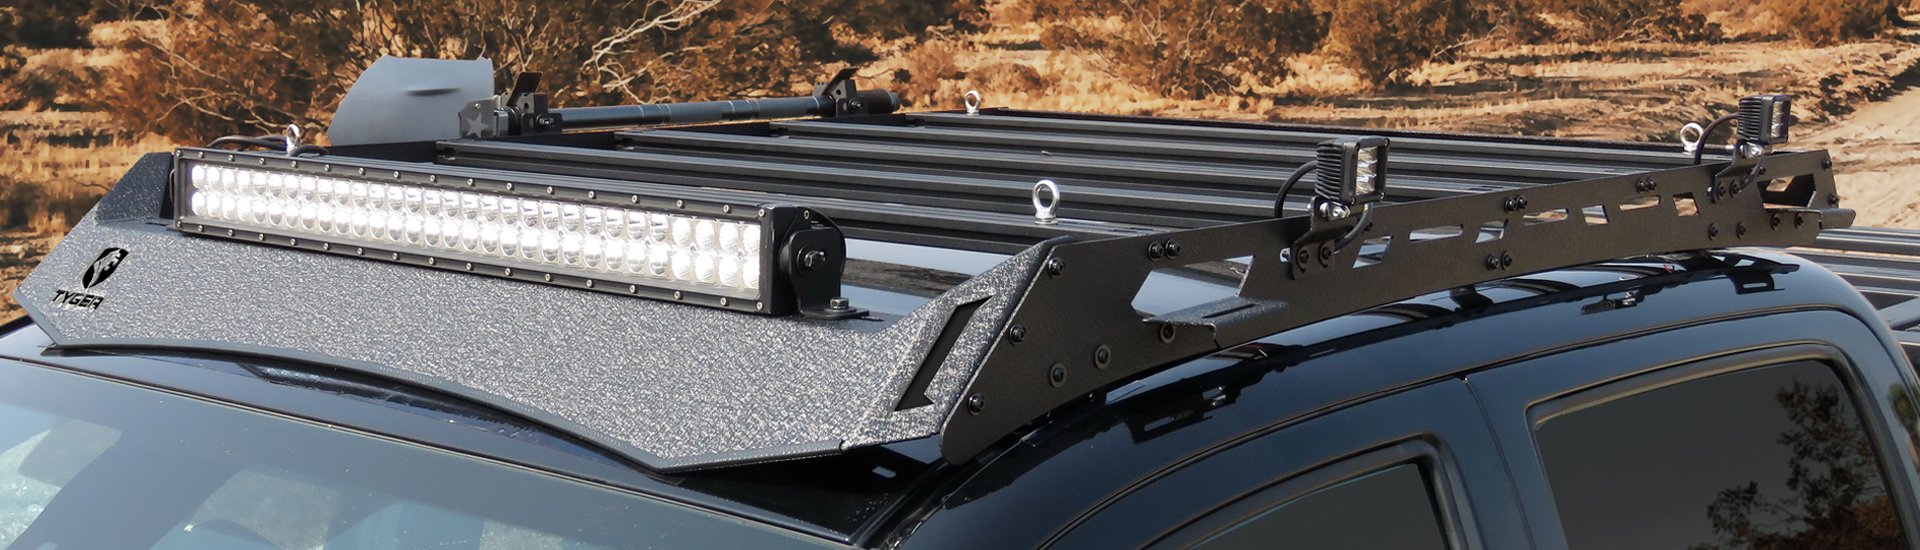 Tyger Auto: Truck Roof Rack